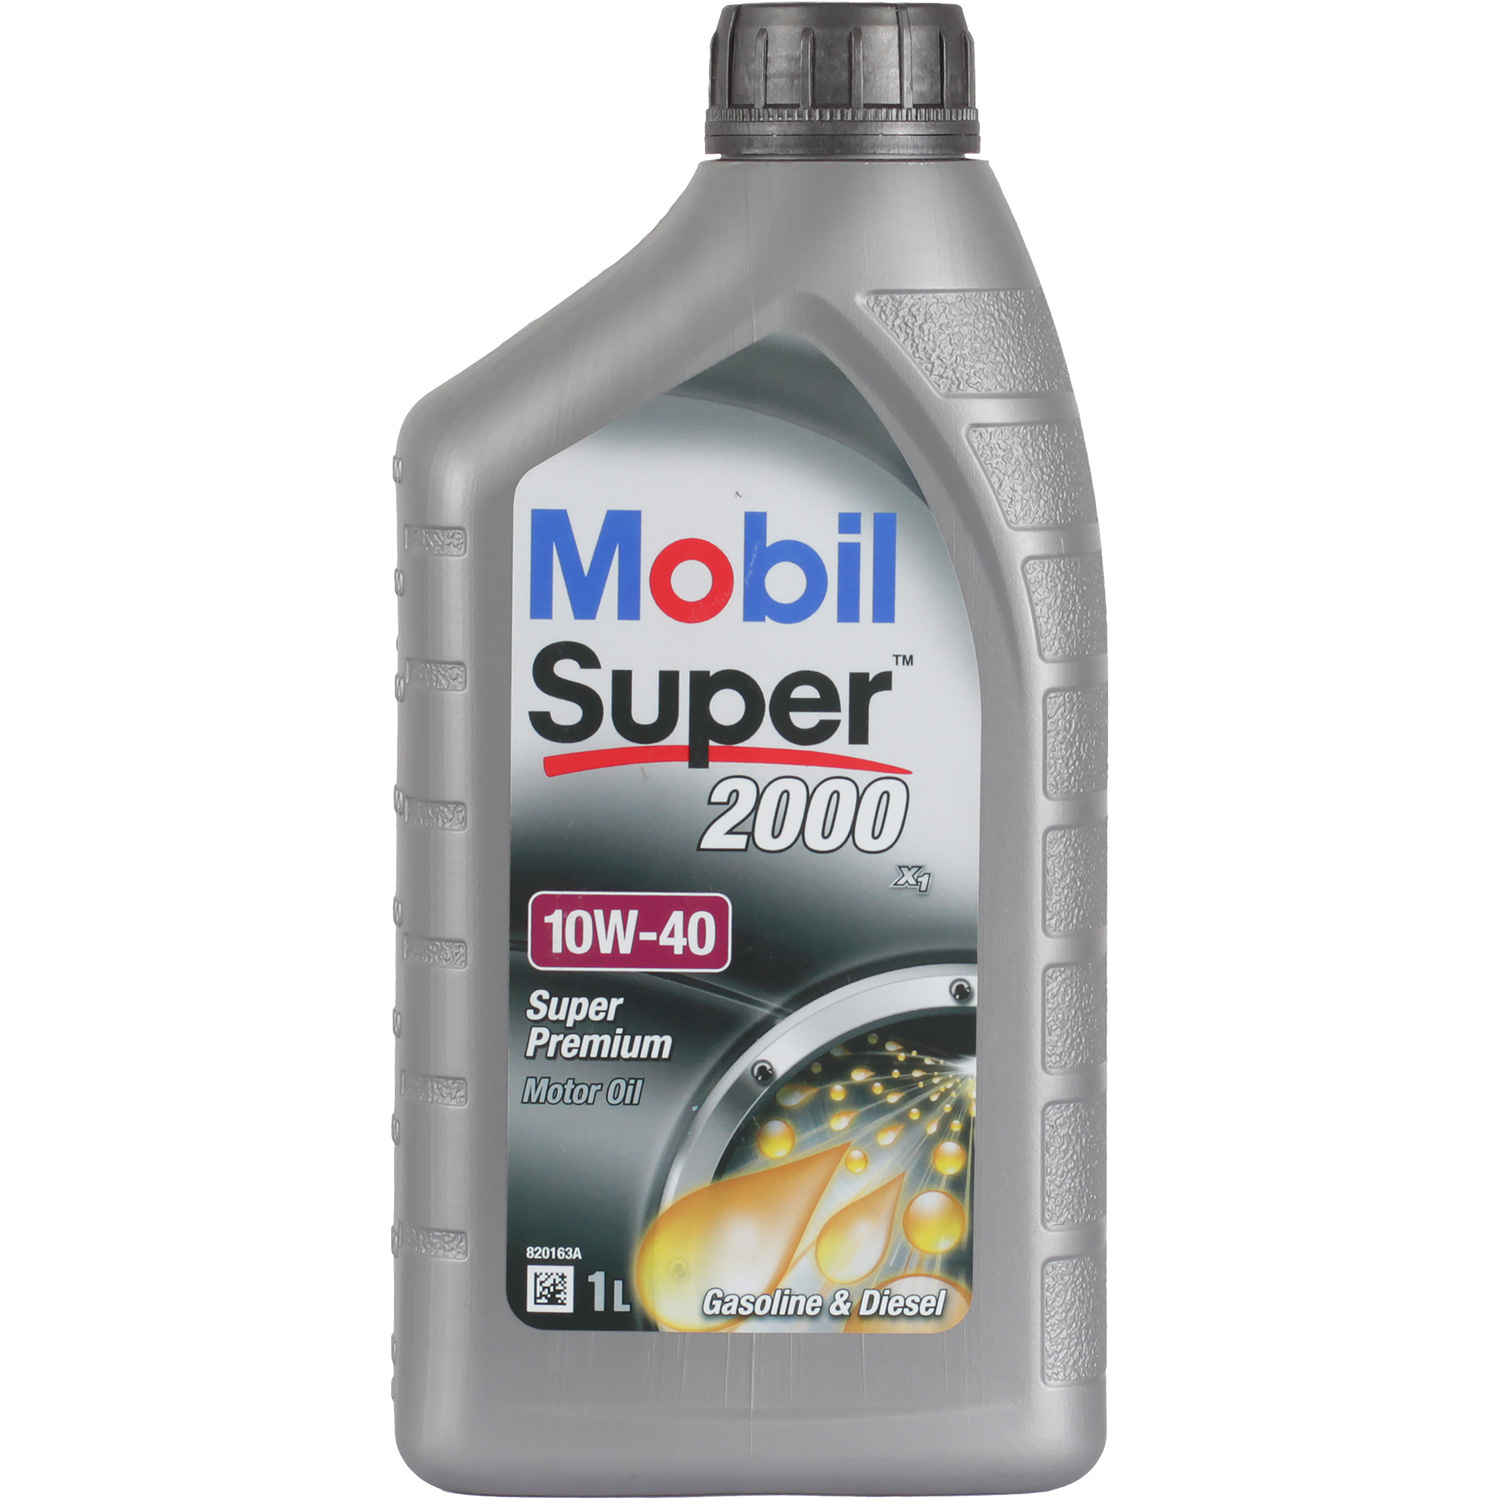 Mobil Моторное масло Mobil Super 2000 X1 10W-40, 1 л mobil моторное масло mobil super 3000 x1 5w 40 1 л